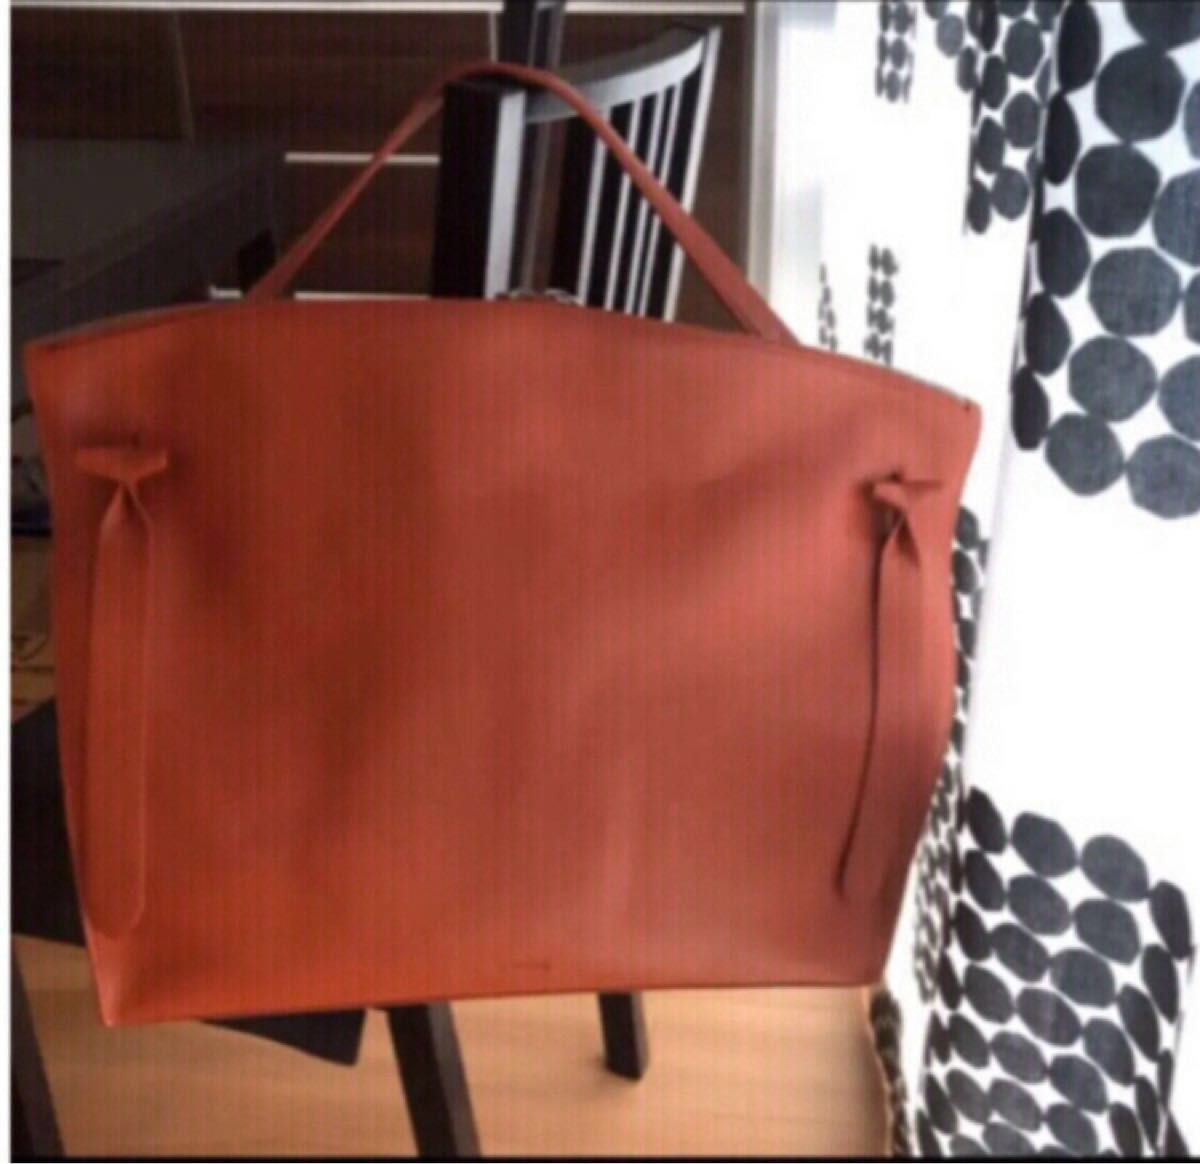 JIL SANDER Hill Leather Bag【LG】ジルサンダー ヒルバッグ ラージ 新品タグ付 